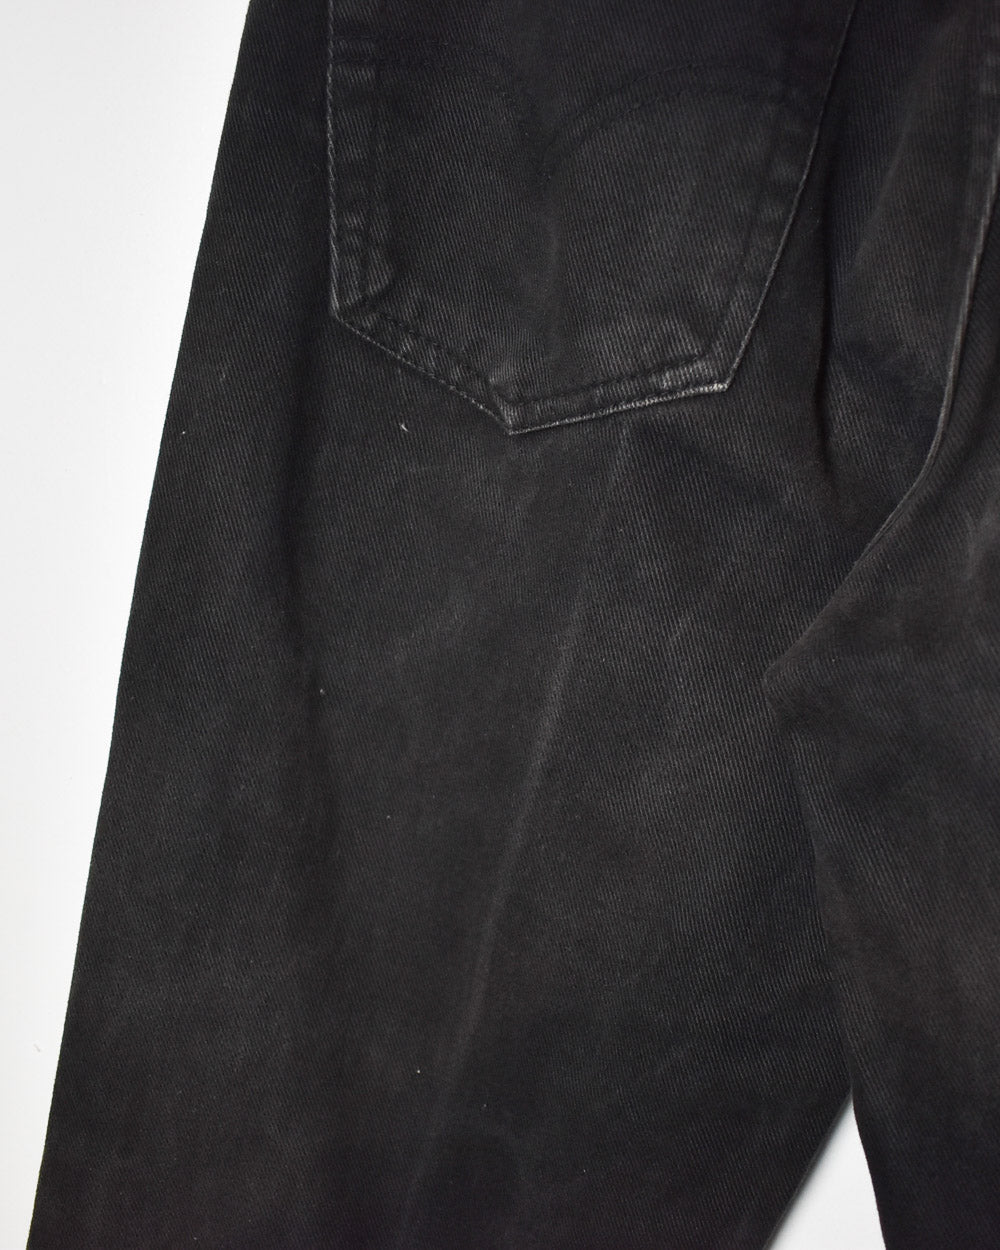 Black Levi's 501 USA Jeans - W28 L30